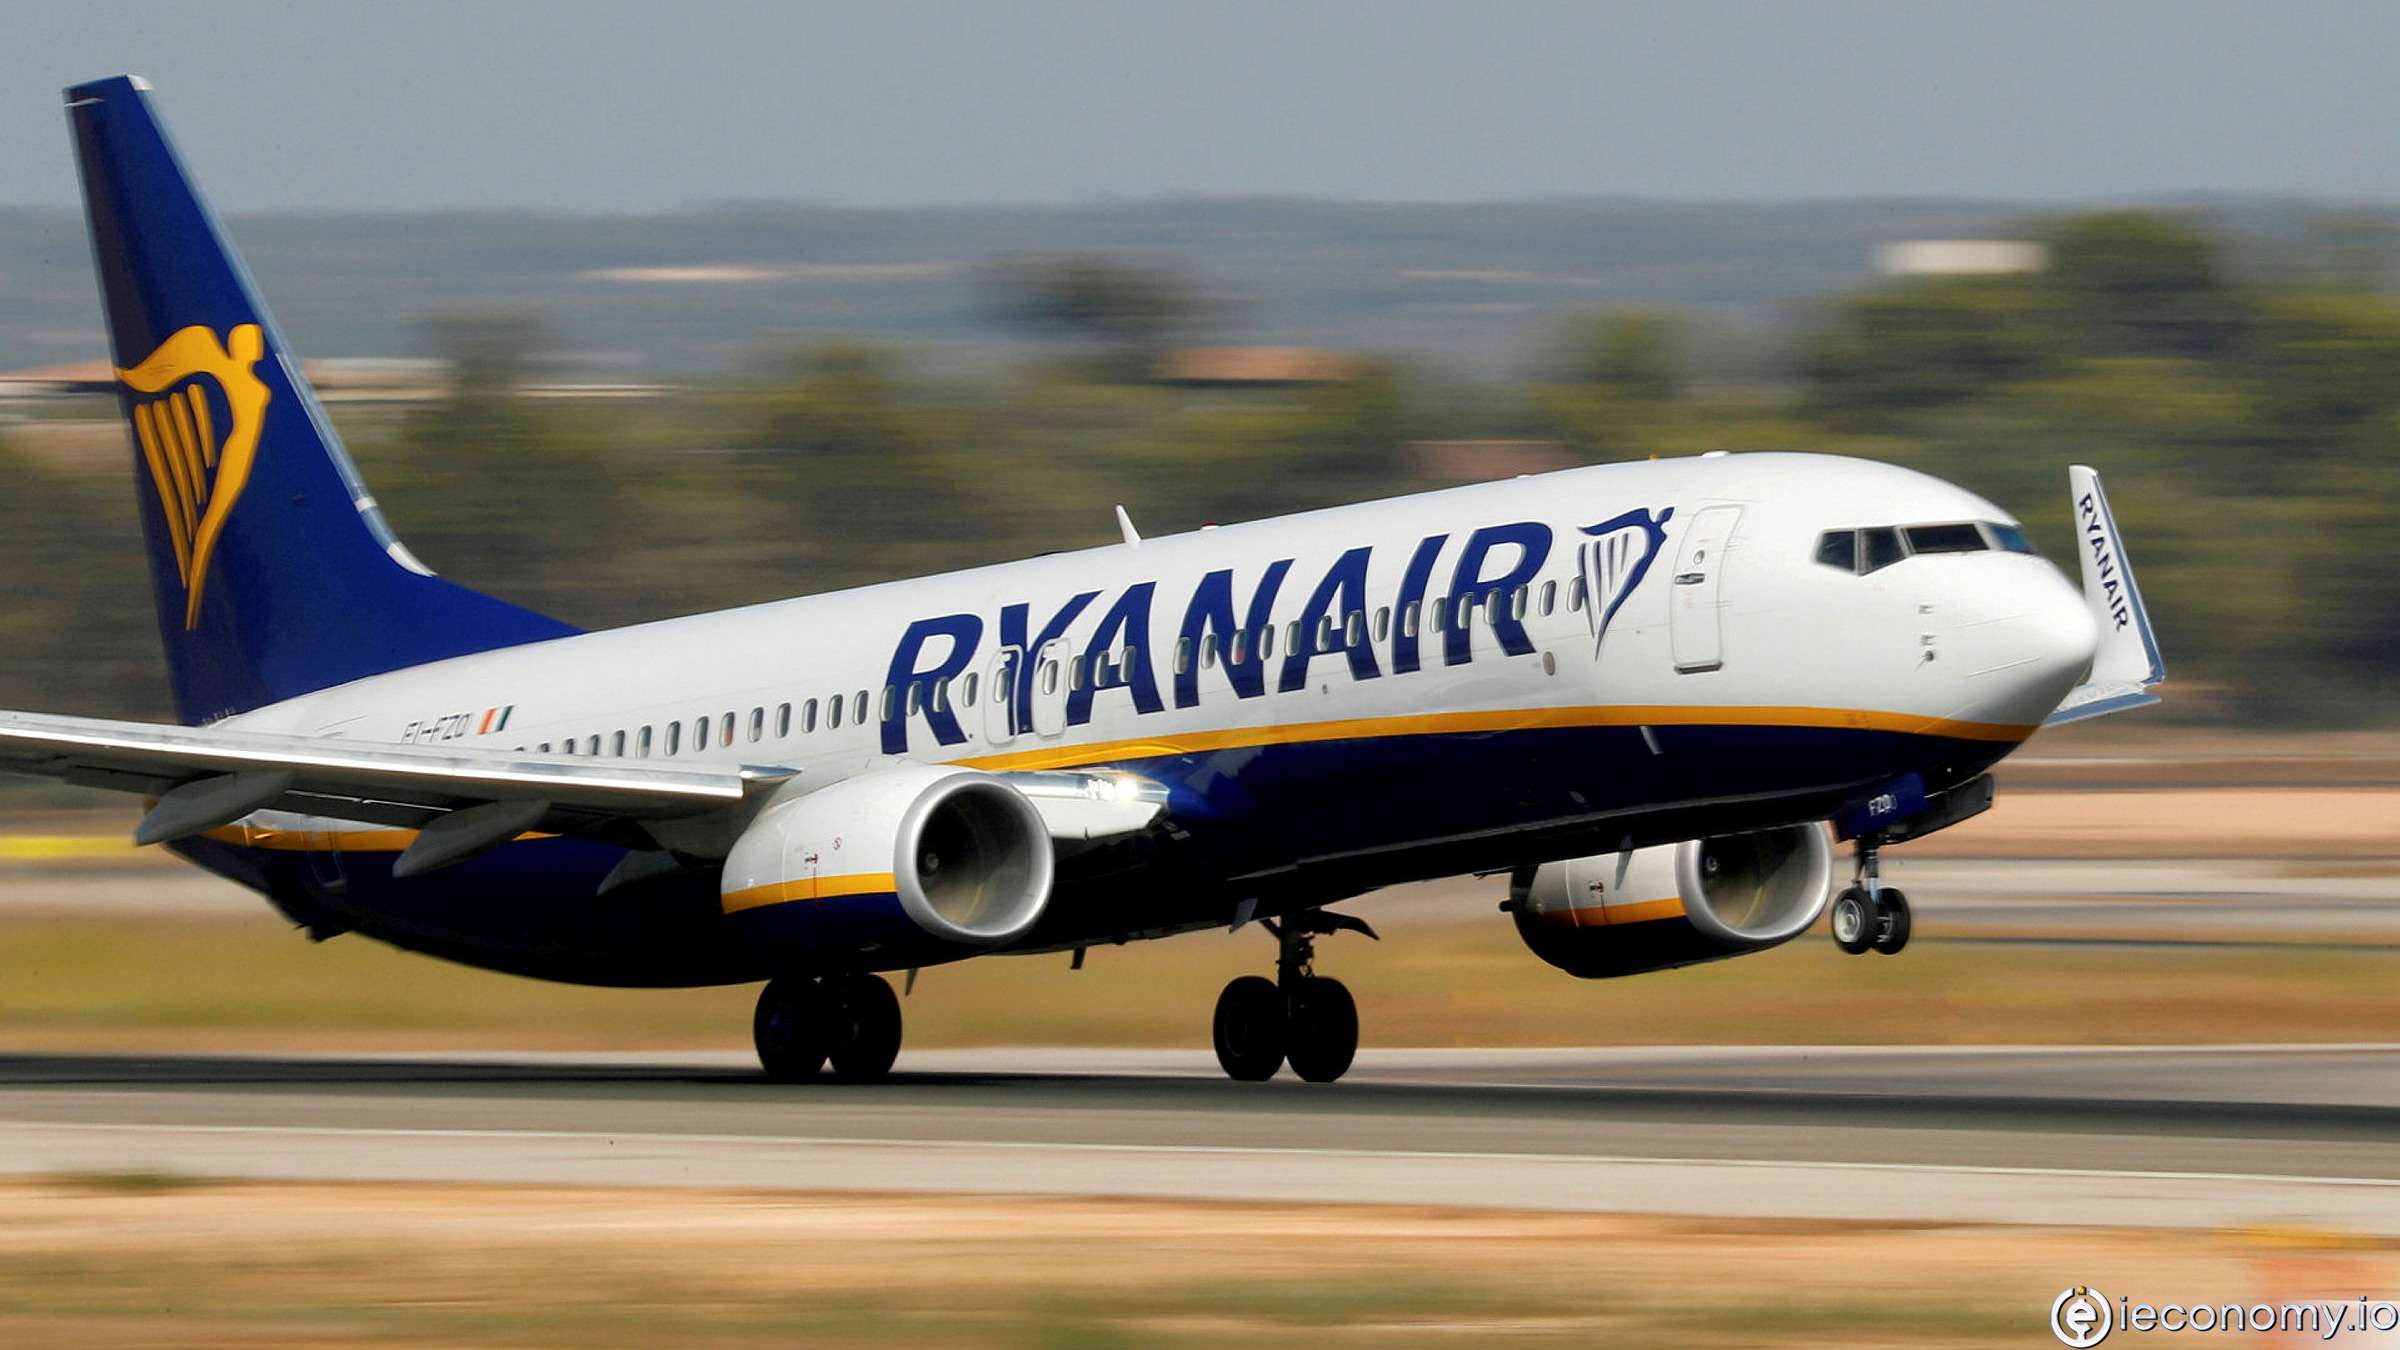 Ryanair has made a quarterly profit